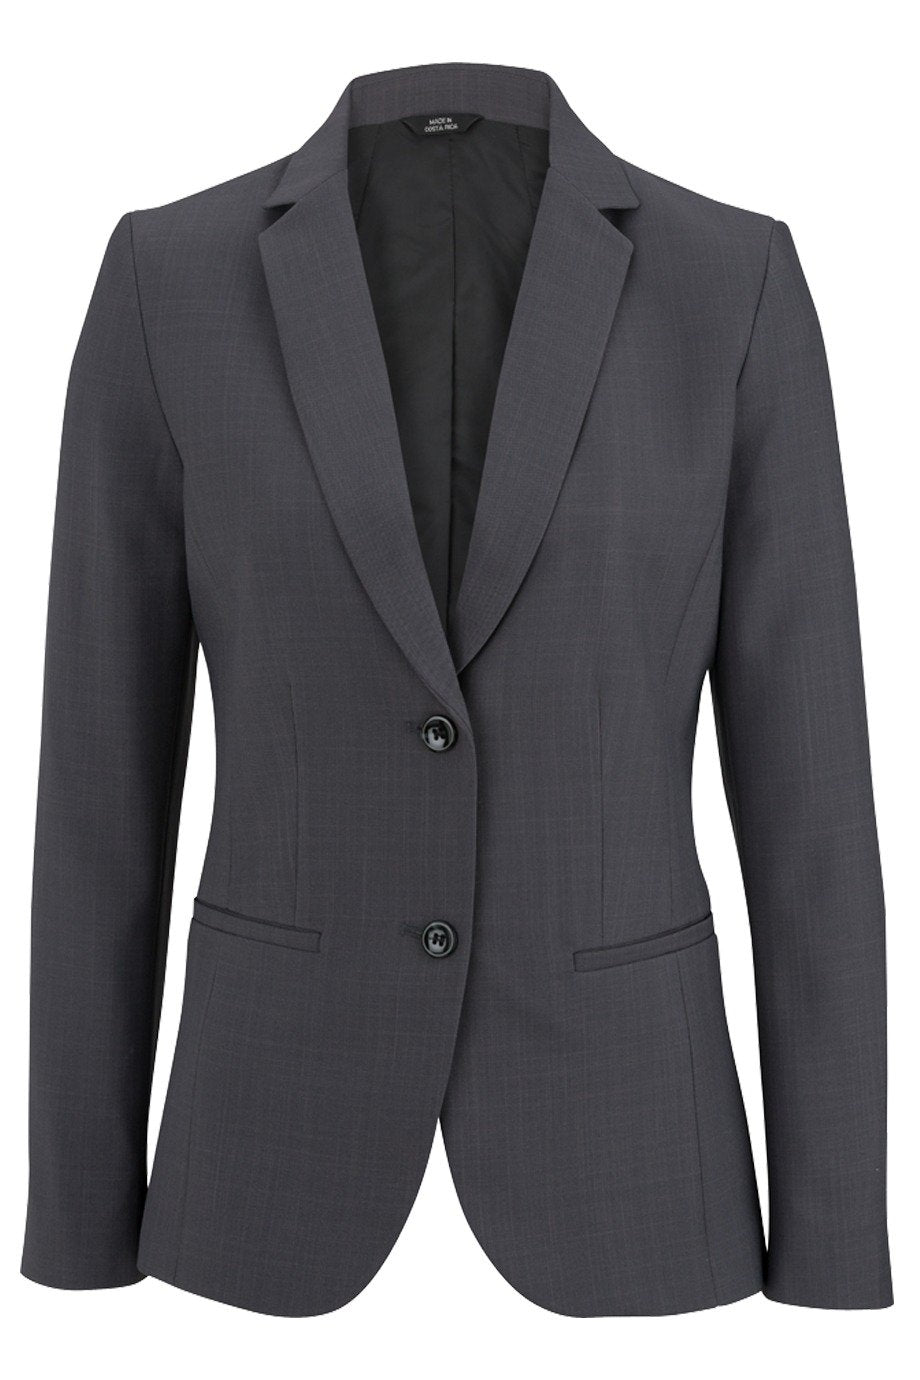 edwards-garment-ladies-suit-coats-and-blazers